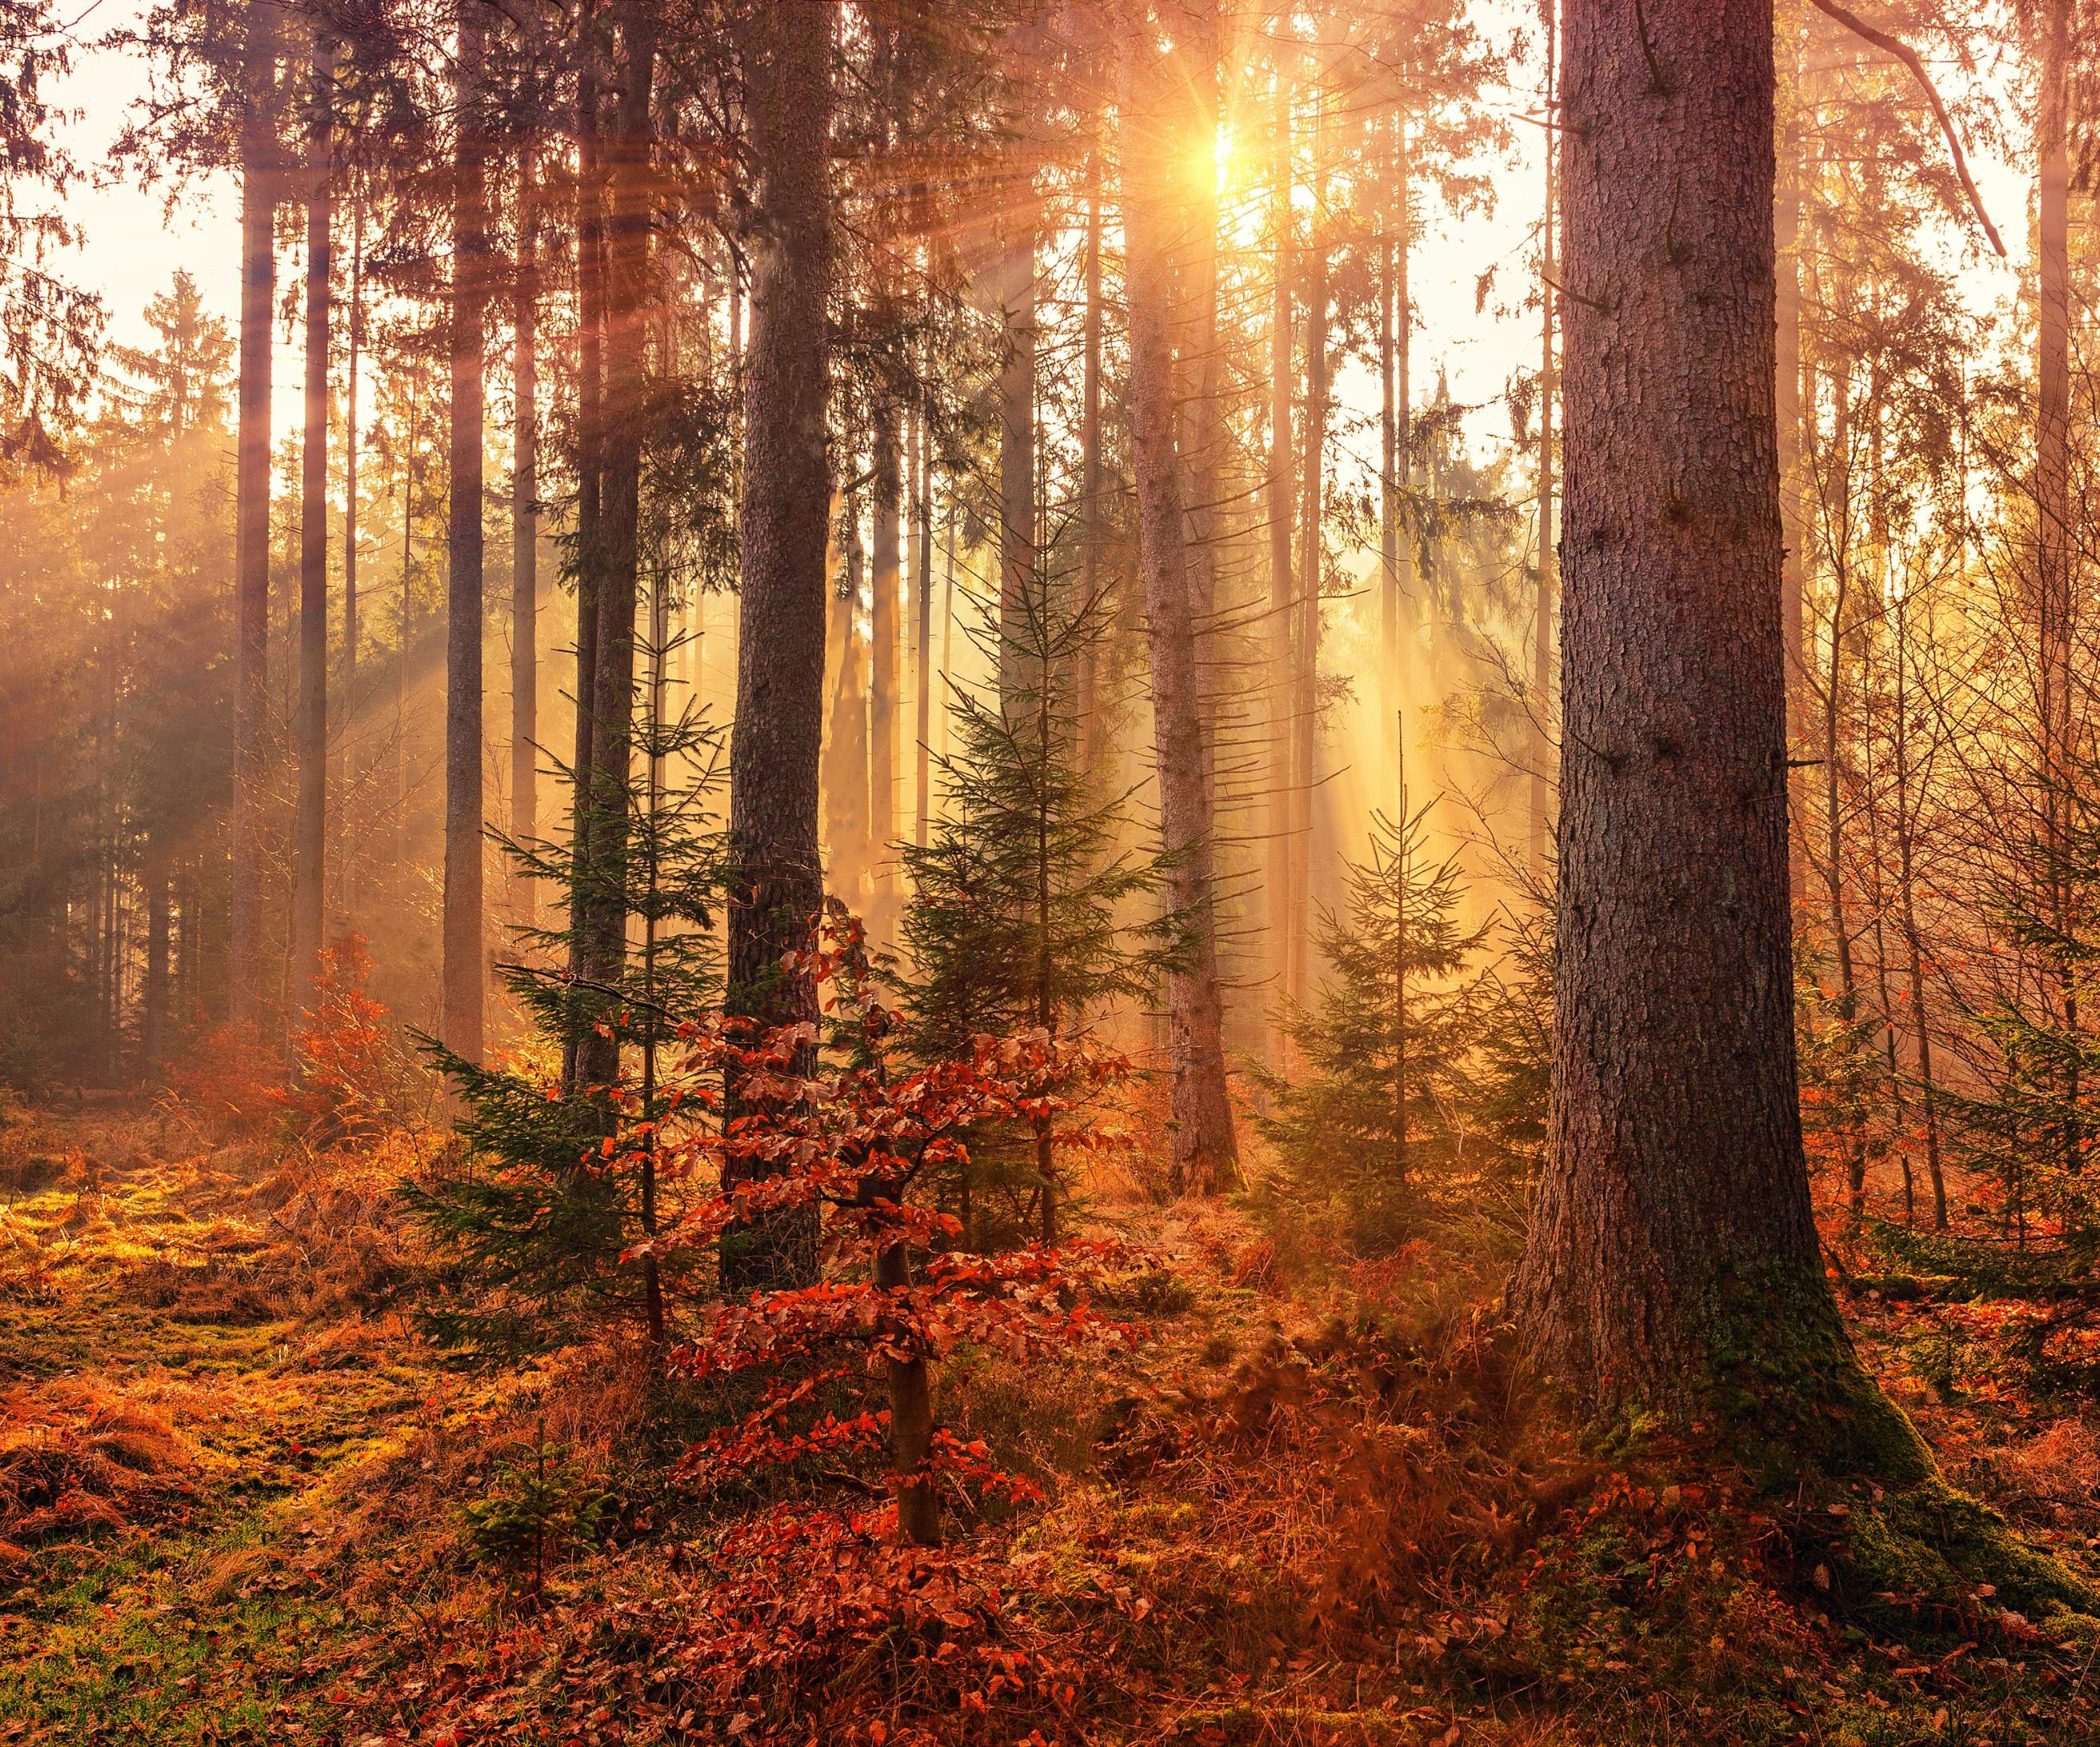 Sunburst shining through trees during autumn season in New Hampshire